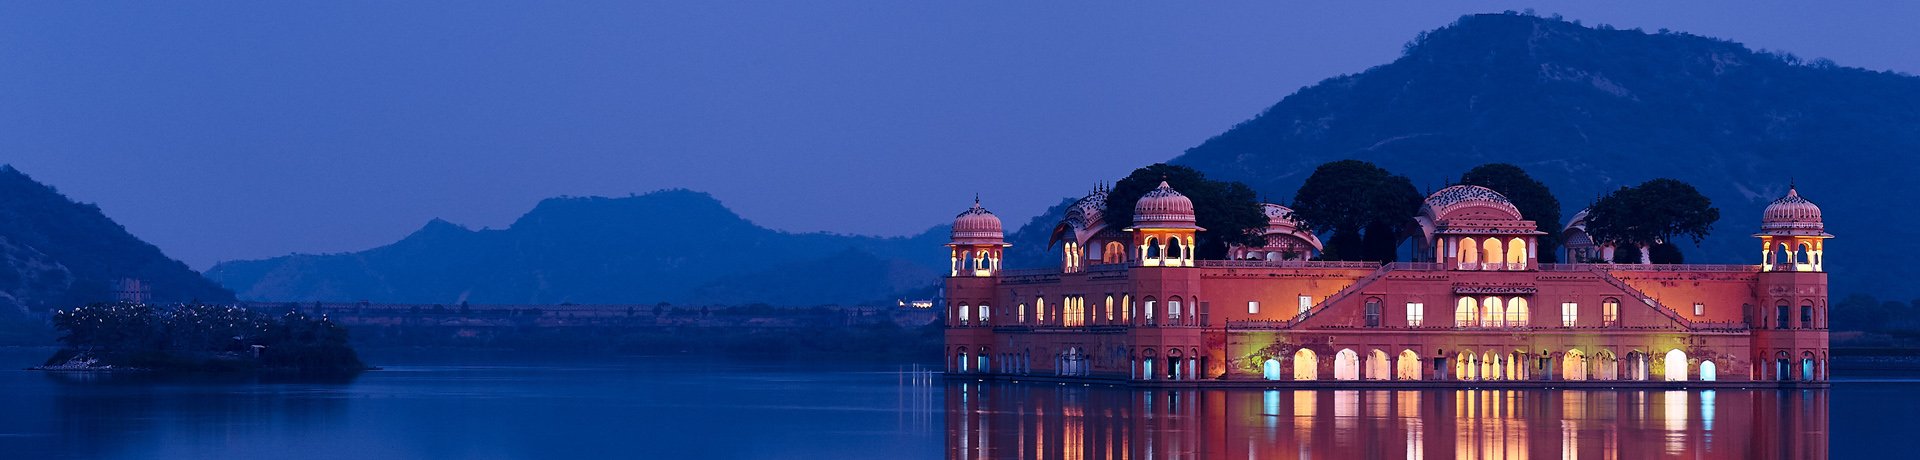 Jal Mahal, Jaipur, India Honeymoon